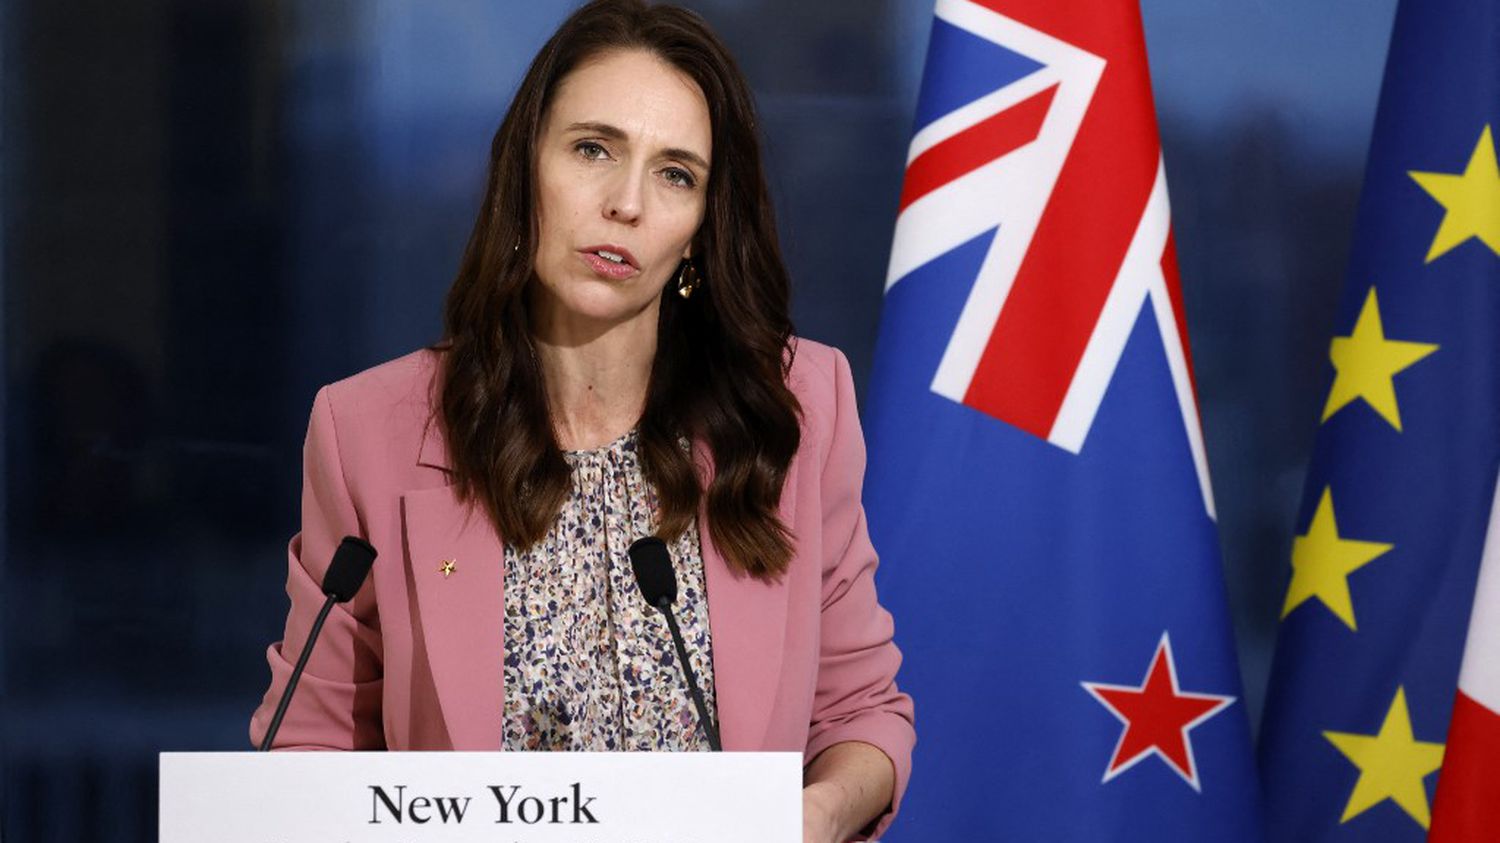 'I just don't have enough energy': New Zealand Prime Minister Jacinda Ardern announces surprise resignation
